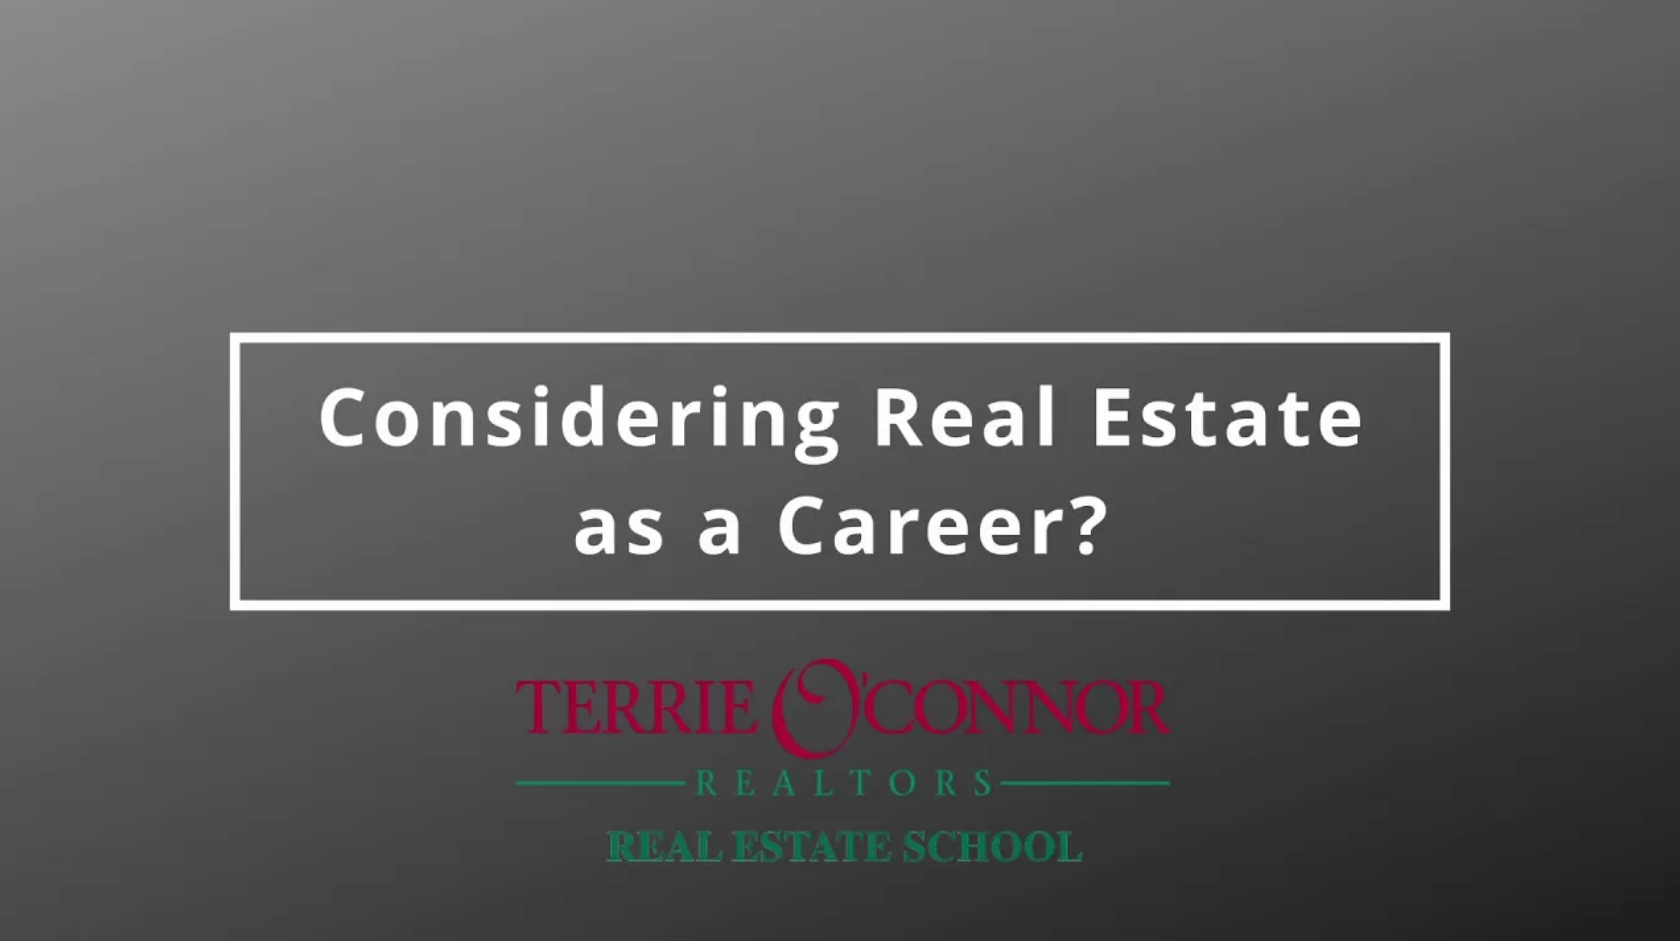 Terrie O'Connor Realtors Real Estate School